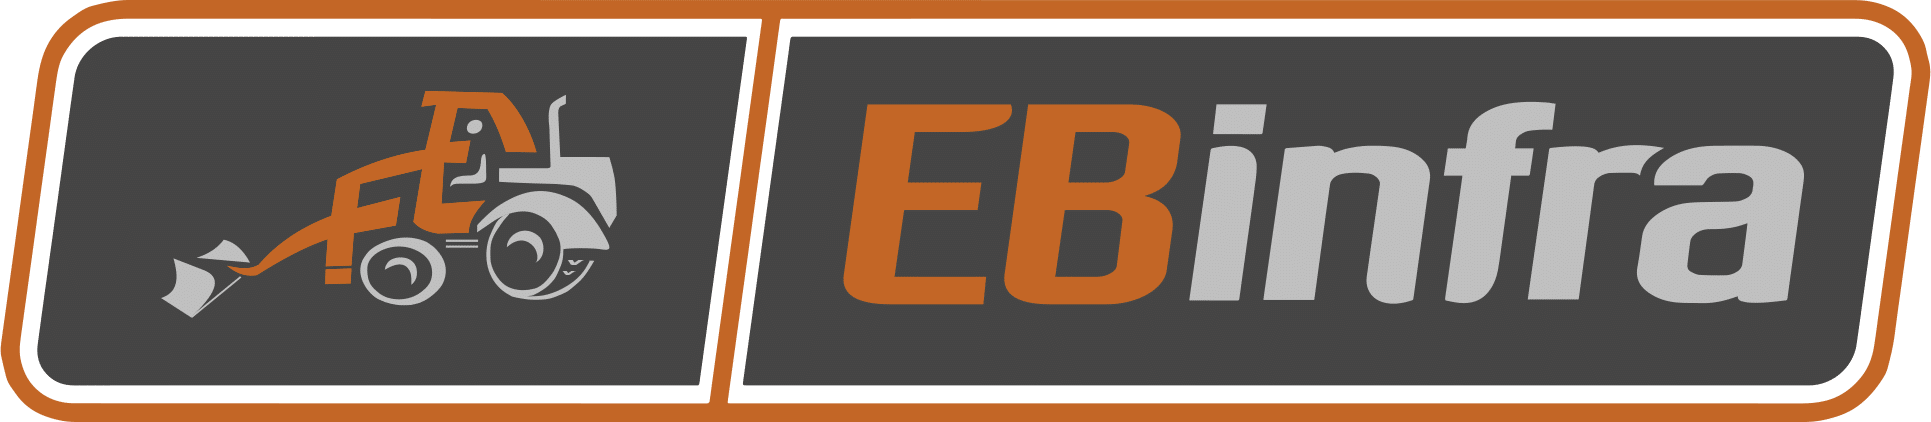 EB-INFRA-logo